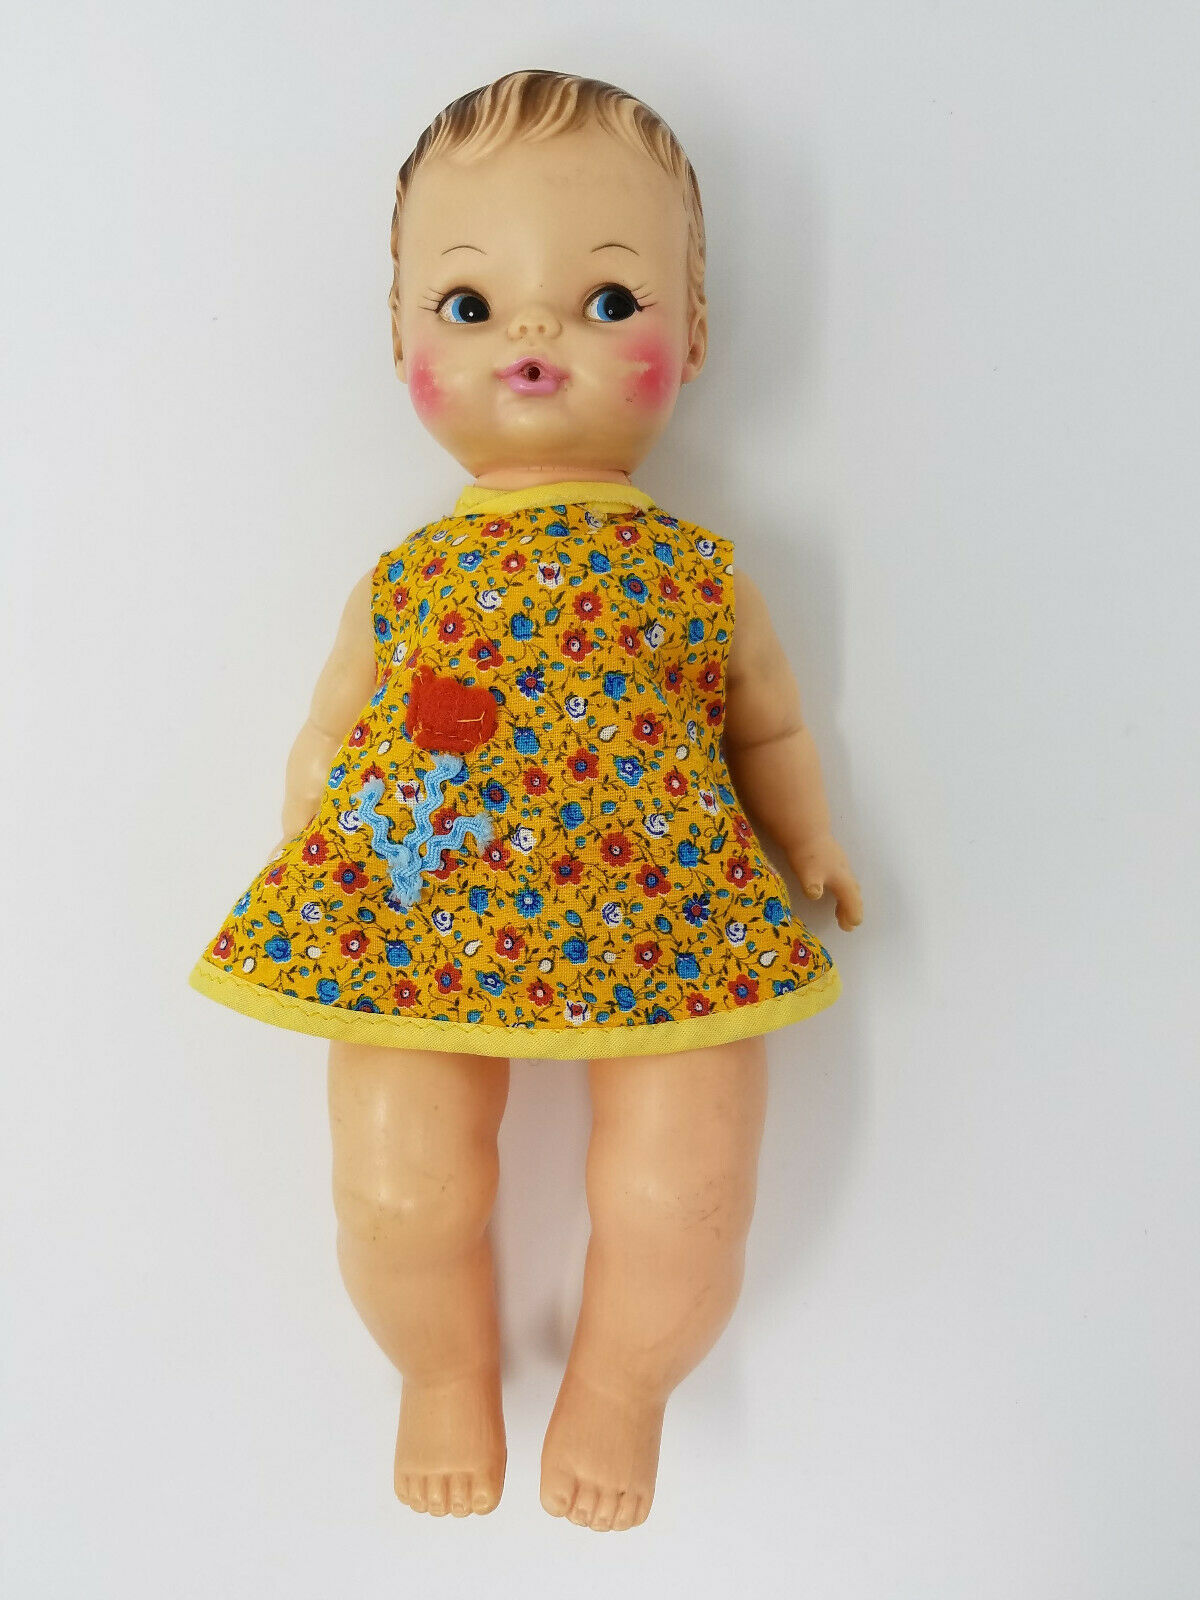 Vintage 1974 Horsman 11” Tall Baby Drink & Wet Doll w/ Flower Dress CUTE